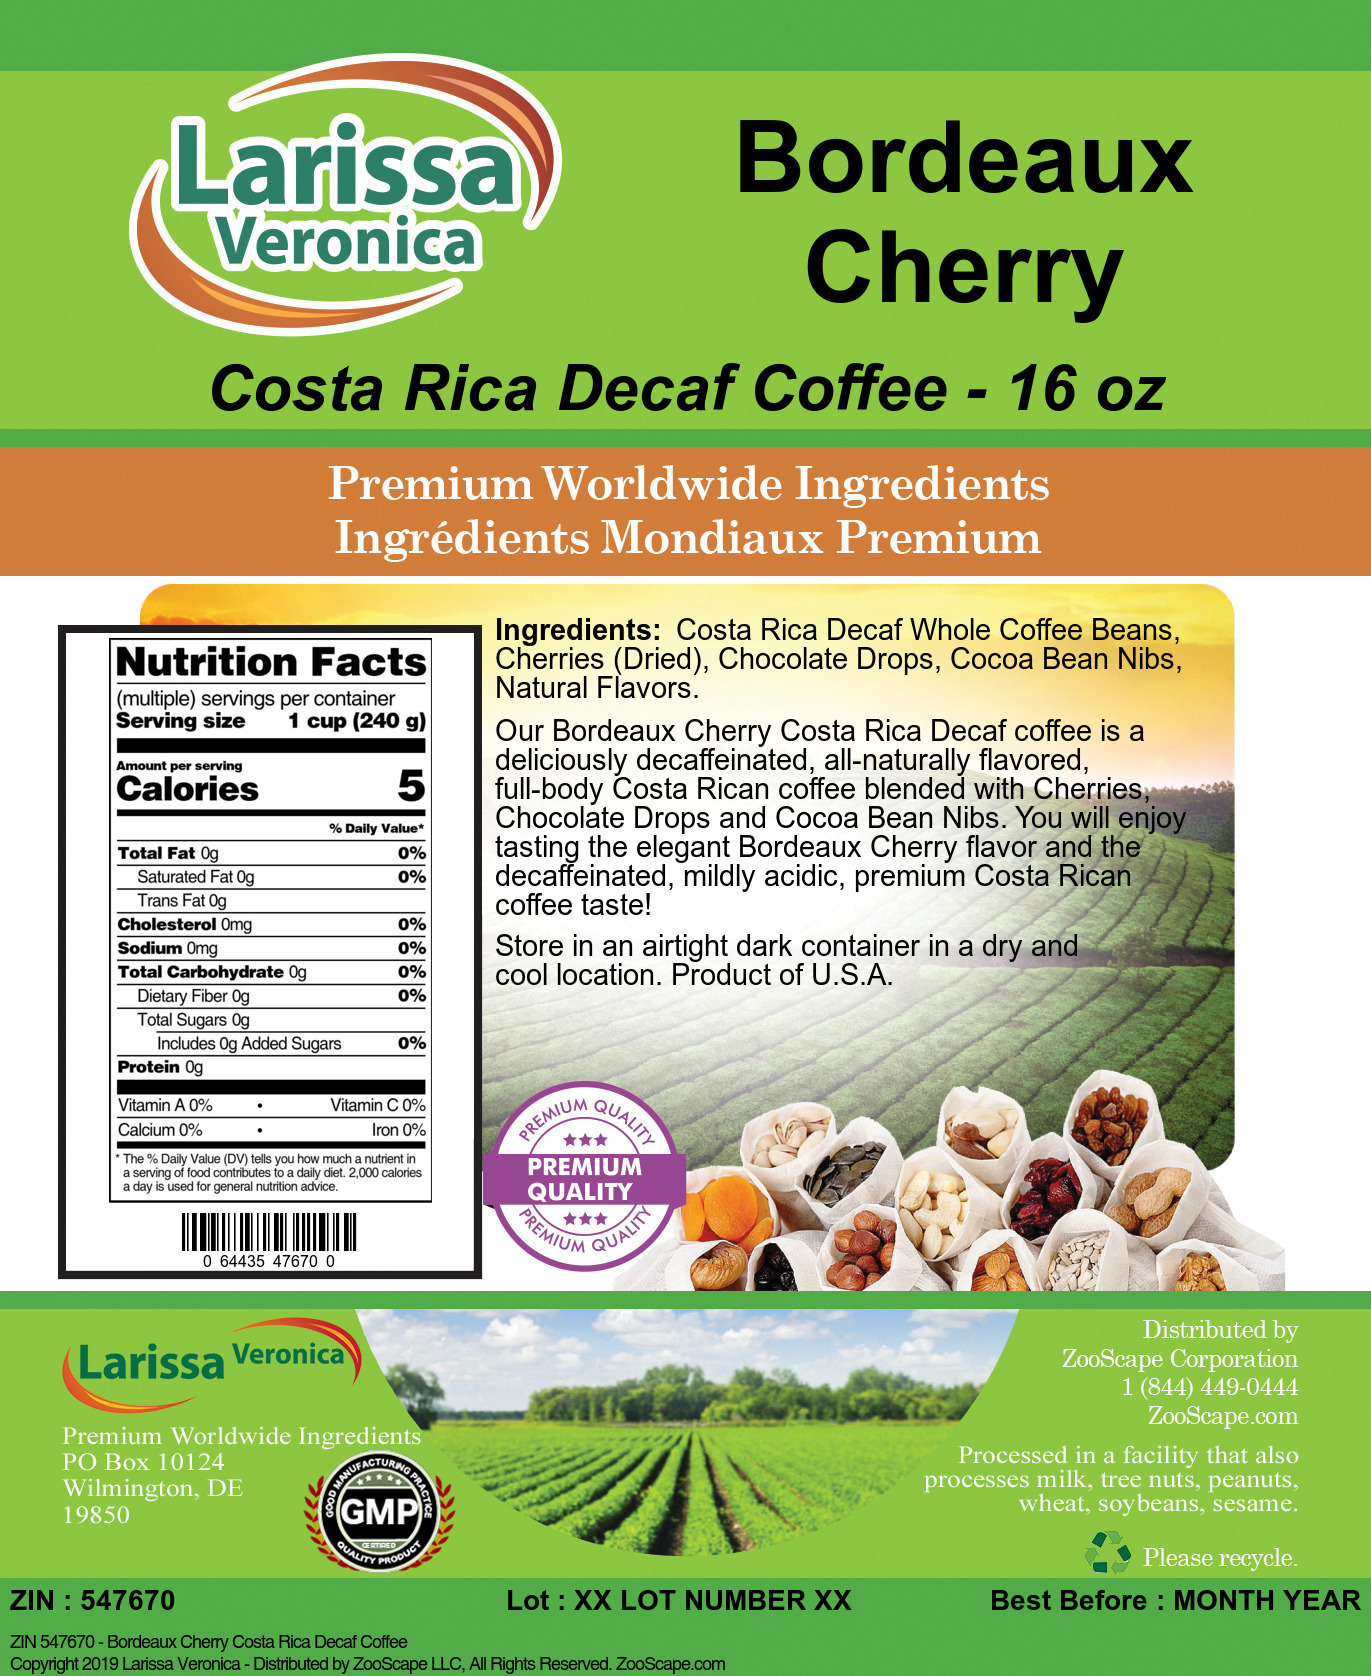 Bordeaux Cherry Costa Rica Decaf Coffee - Label